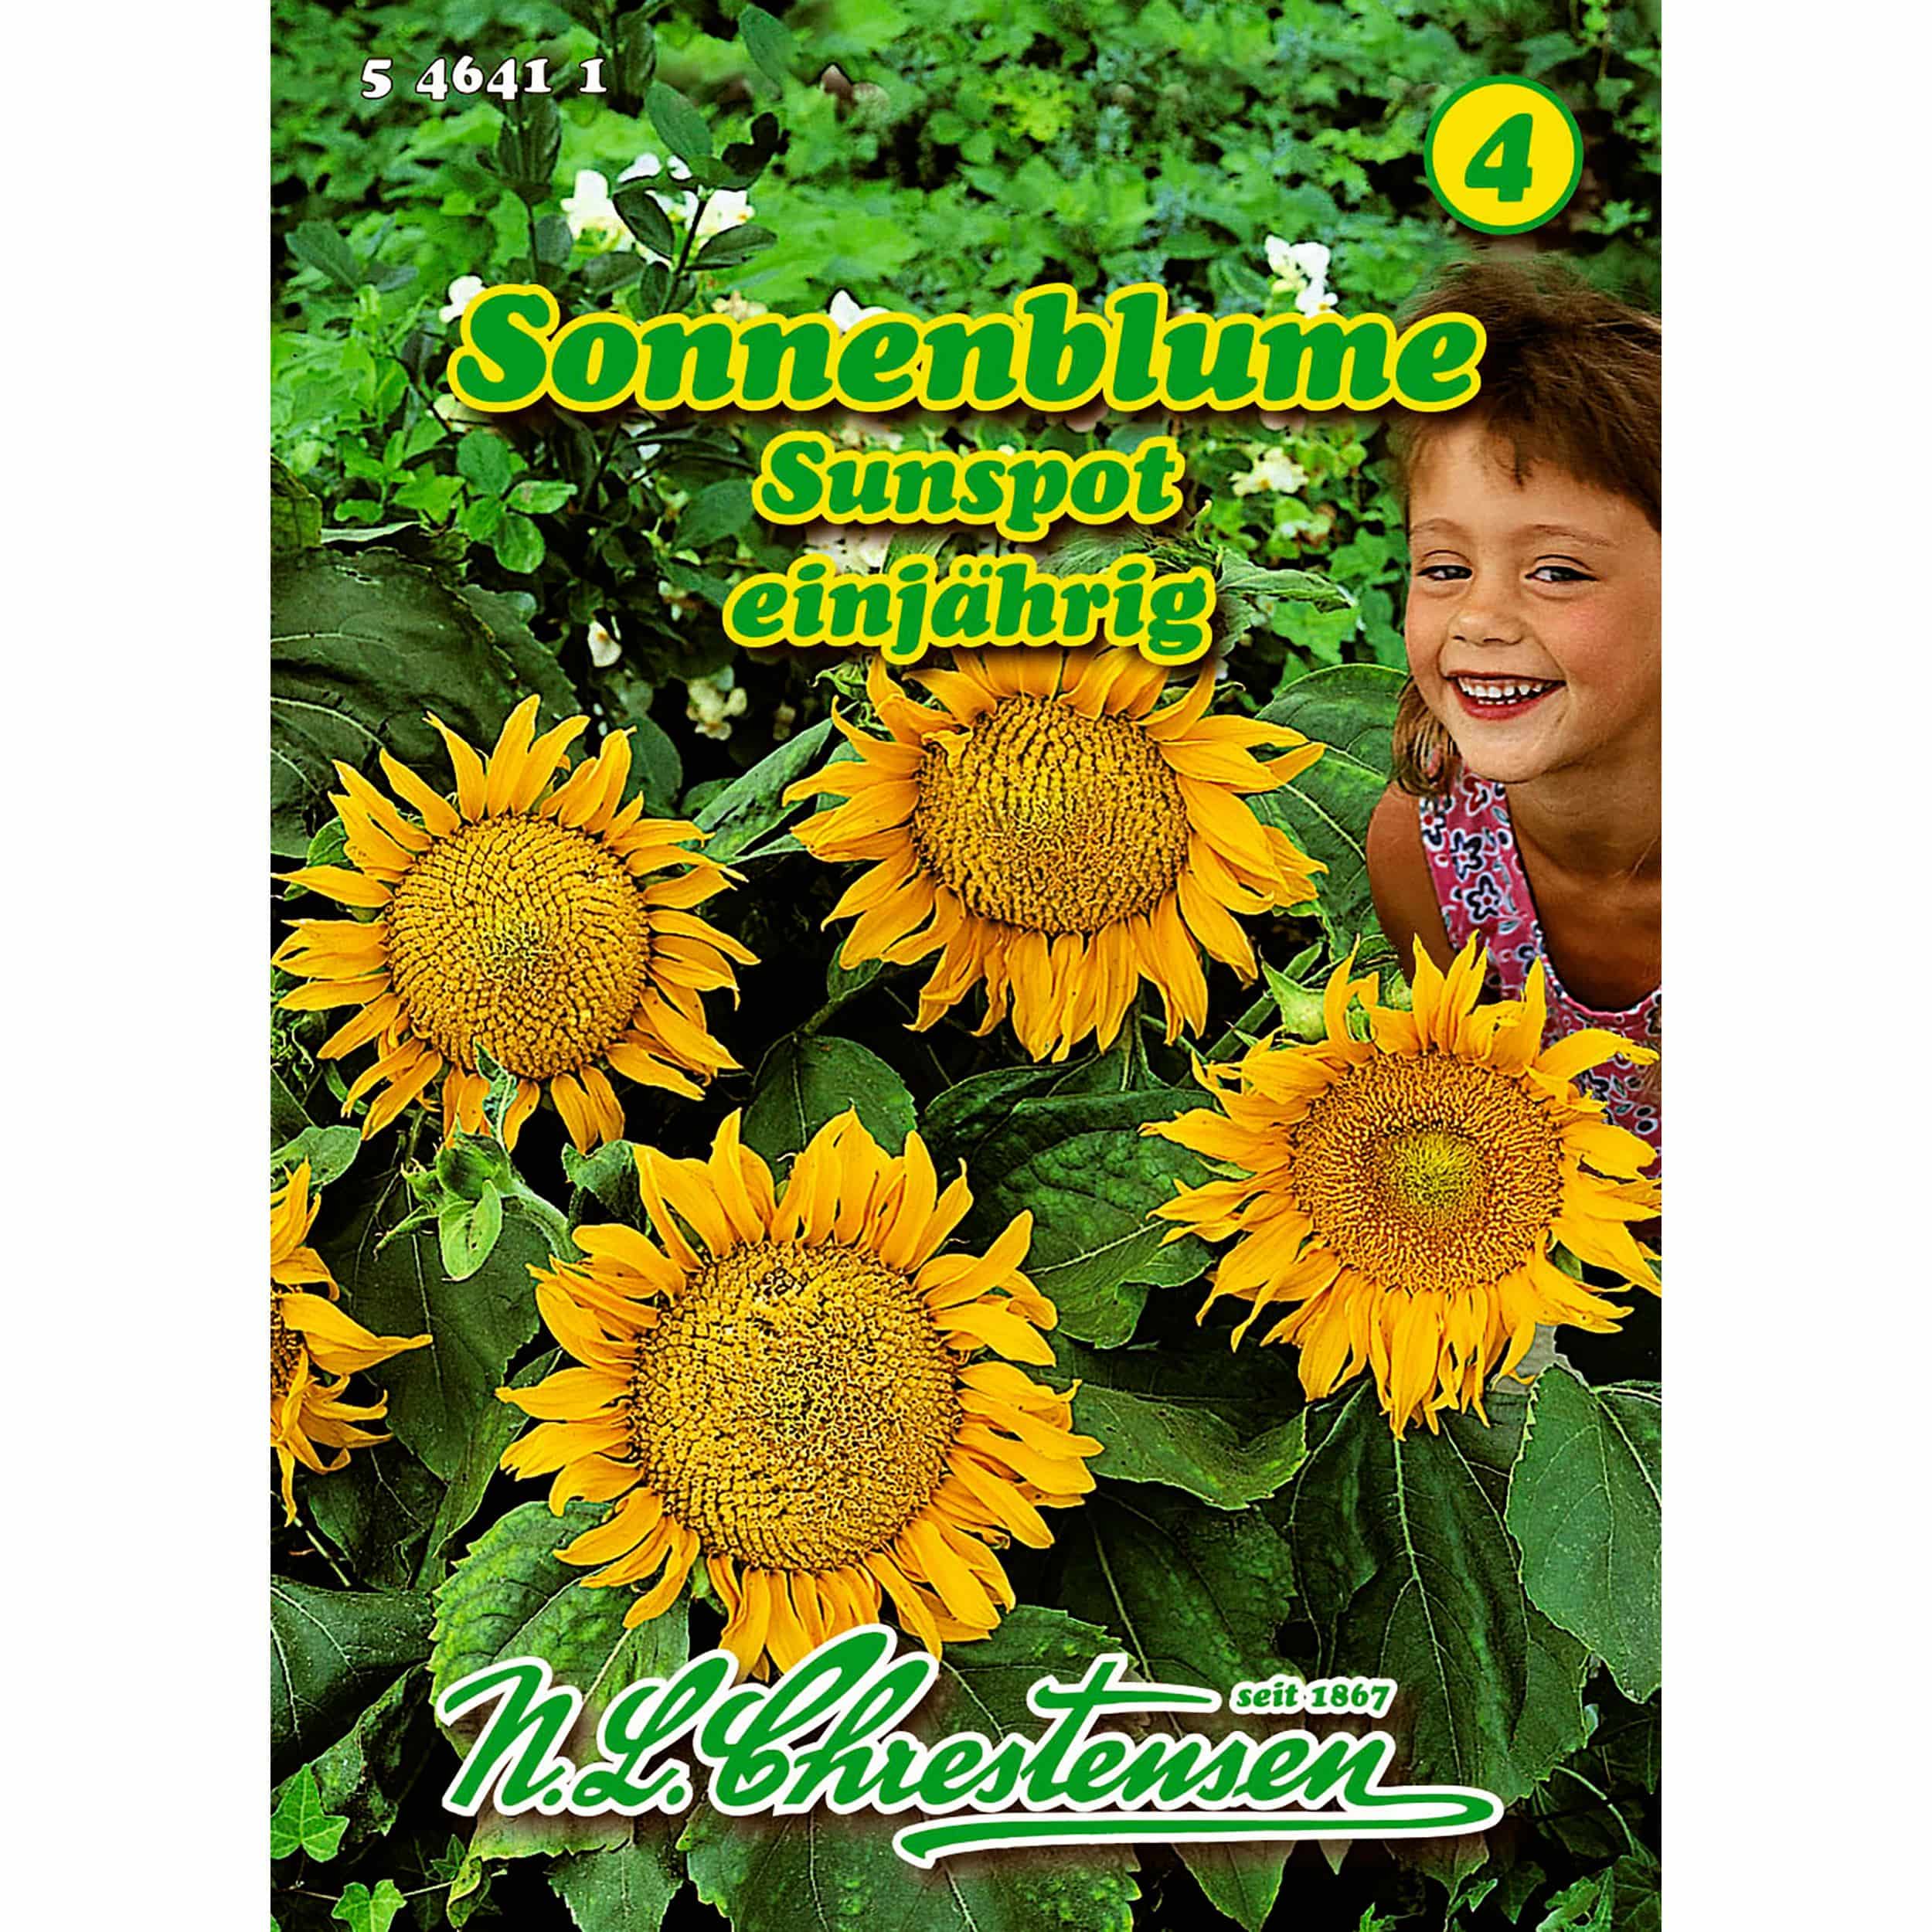 Helianthus, Sonnenblume, Sunspot